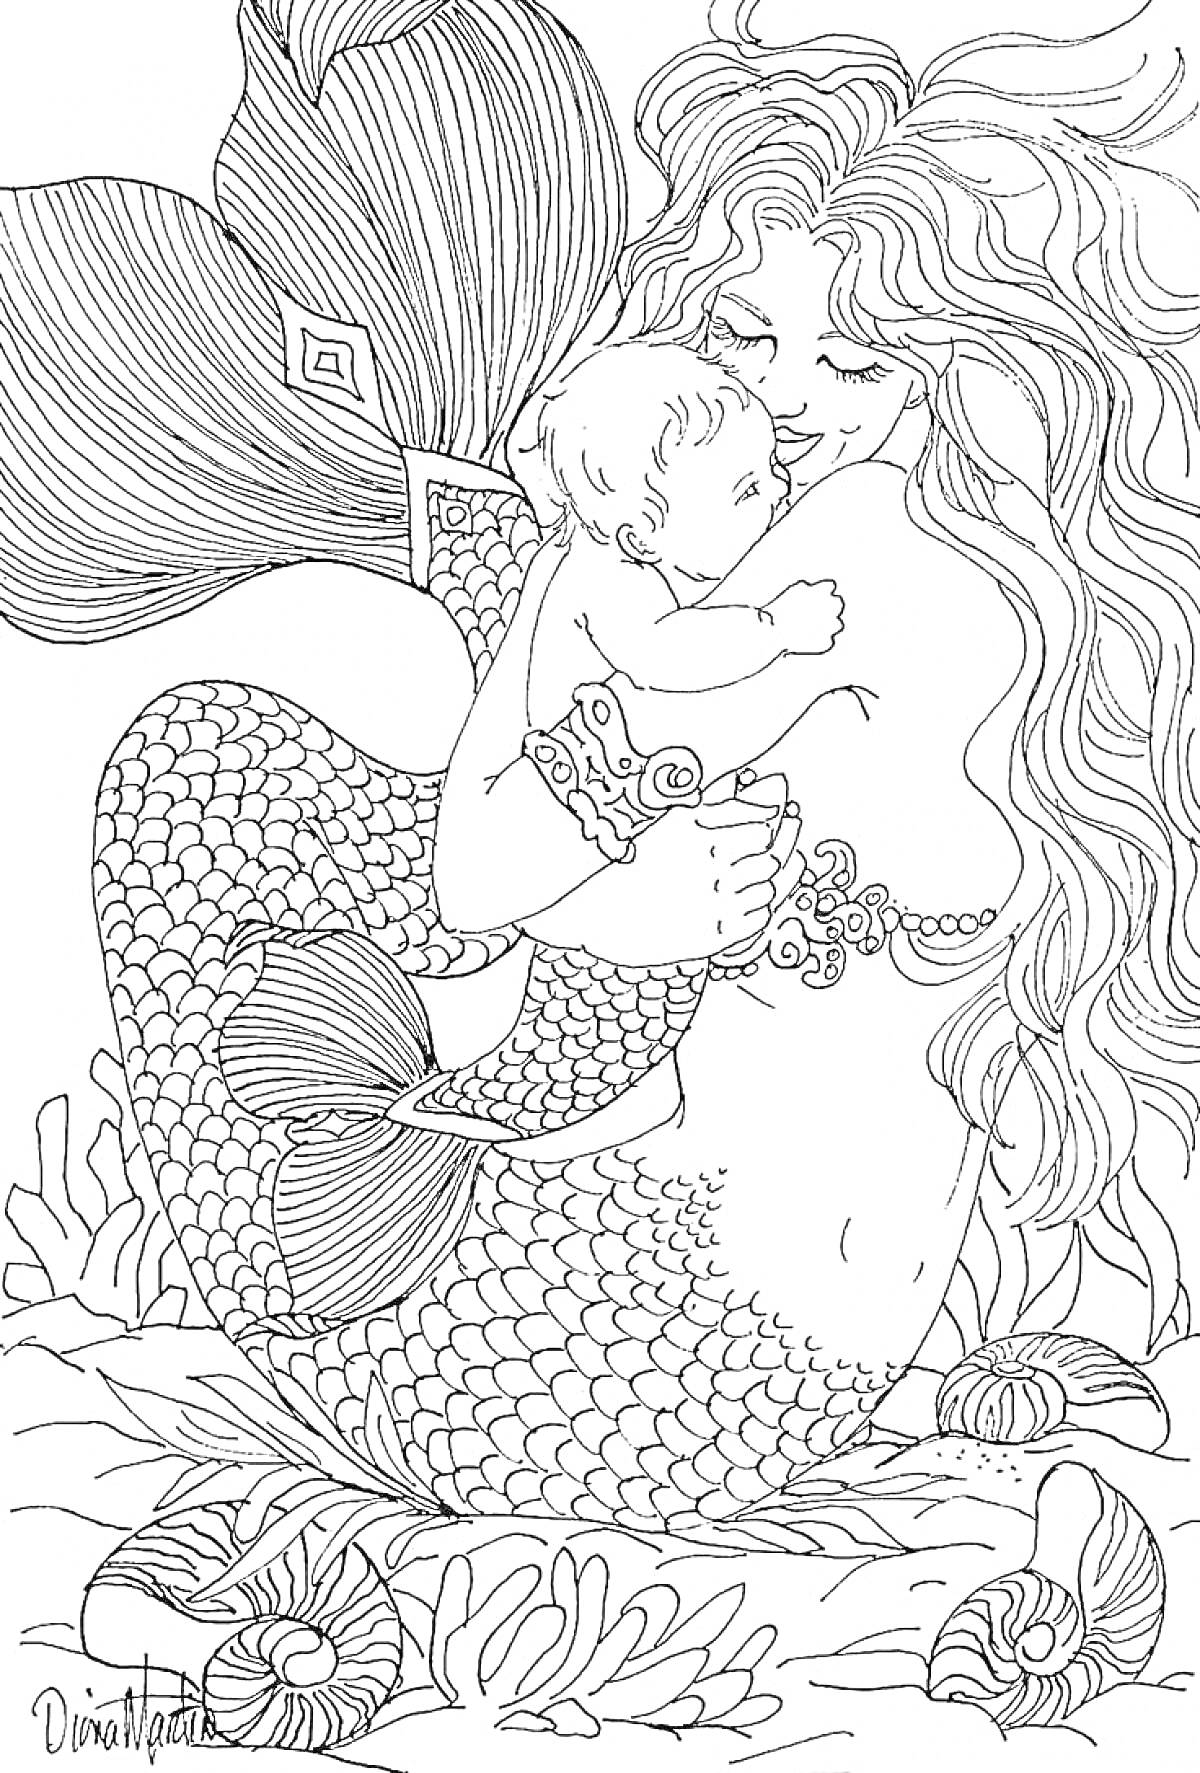 Раскраска Русалка с младенцем на подводном фоне с ракушками и морскими растениями